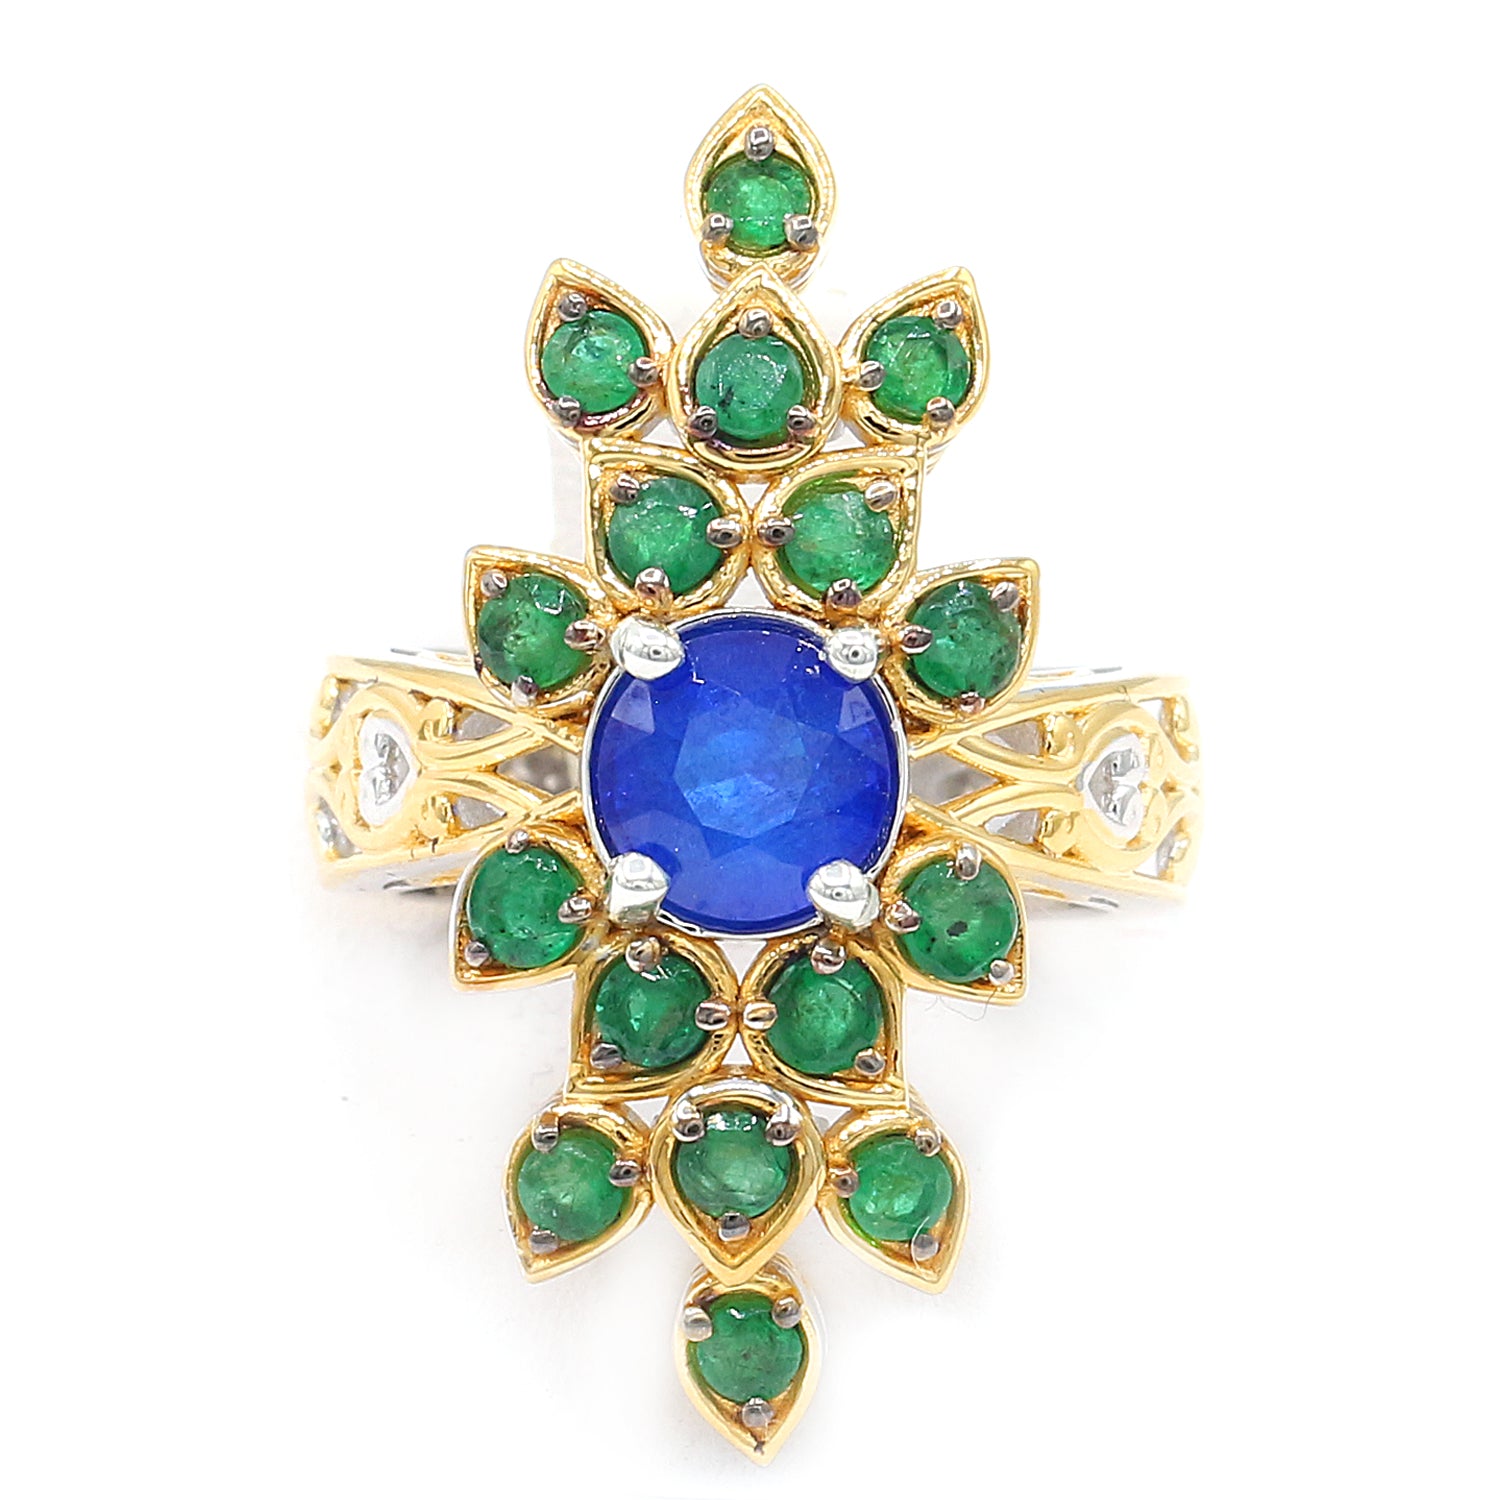 Limited Edition Gems en Vogue 1.87ctw Cobalt Blue Spinel & Grizzly Emerald Ring